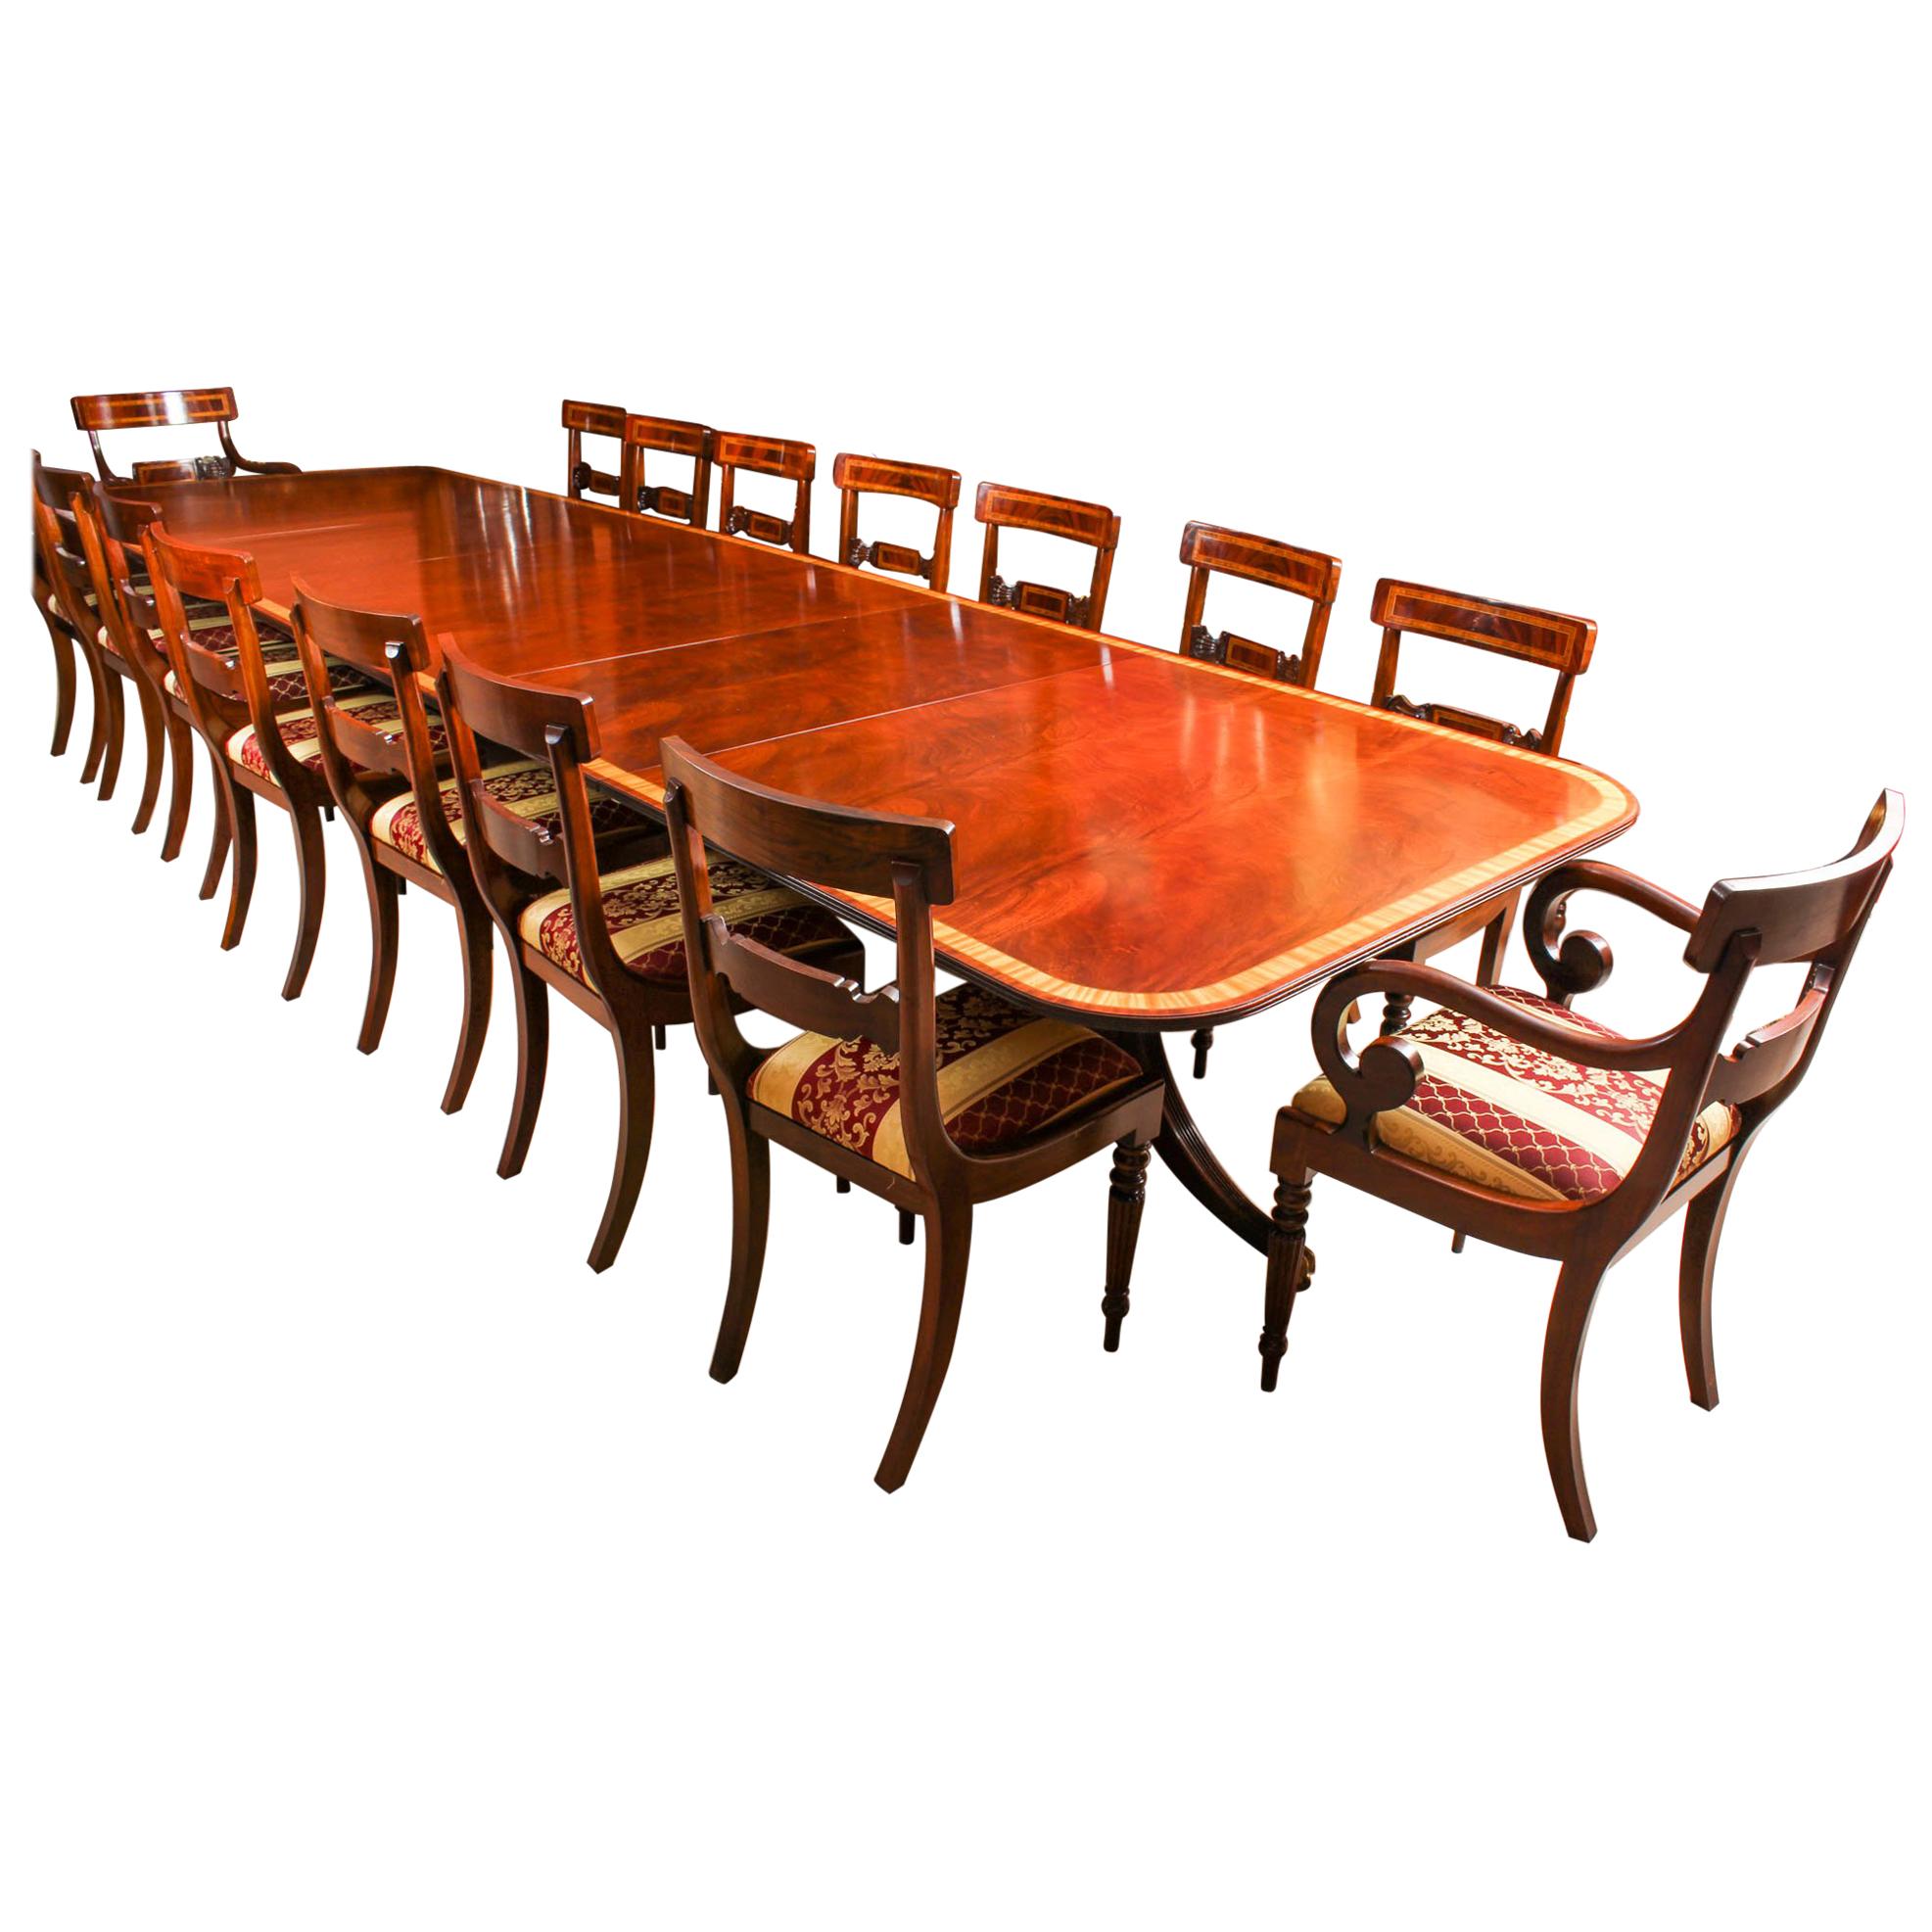 Vintage Arthur Brett Three Pillar Mahogany Dining Table and 14 Chairs